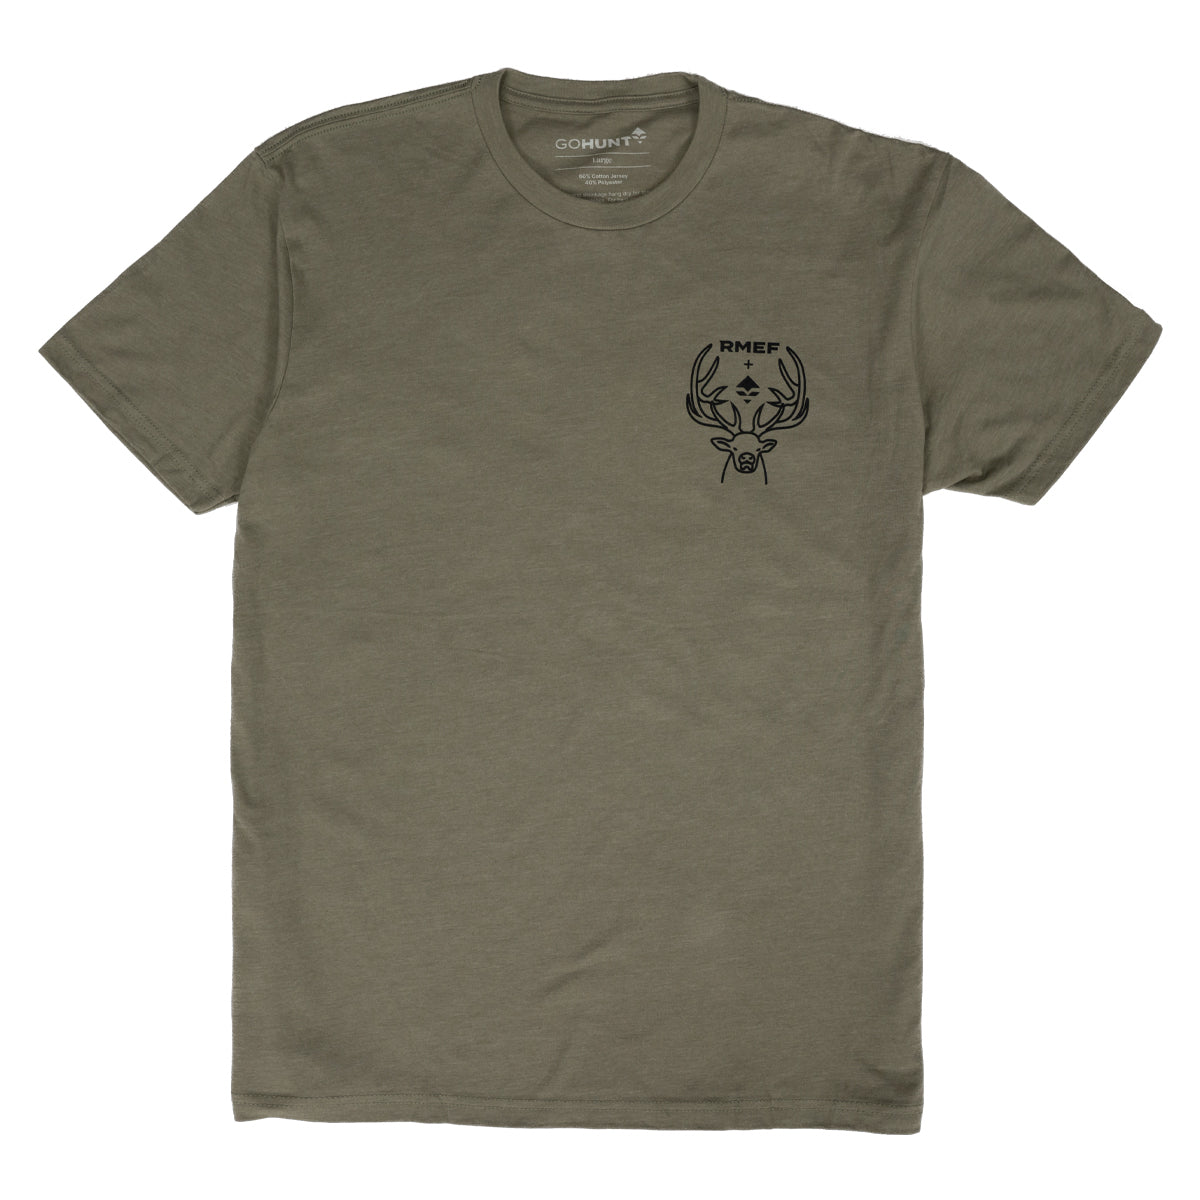 GOHUNT RMEF Bull T-shirt in Light Olive by GOHUNT | GOHUNT - GOHUNT Shop